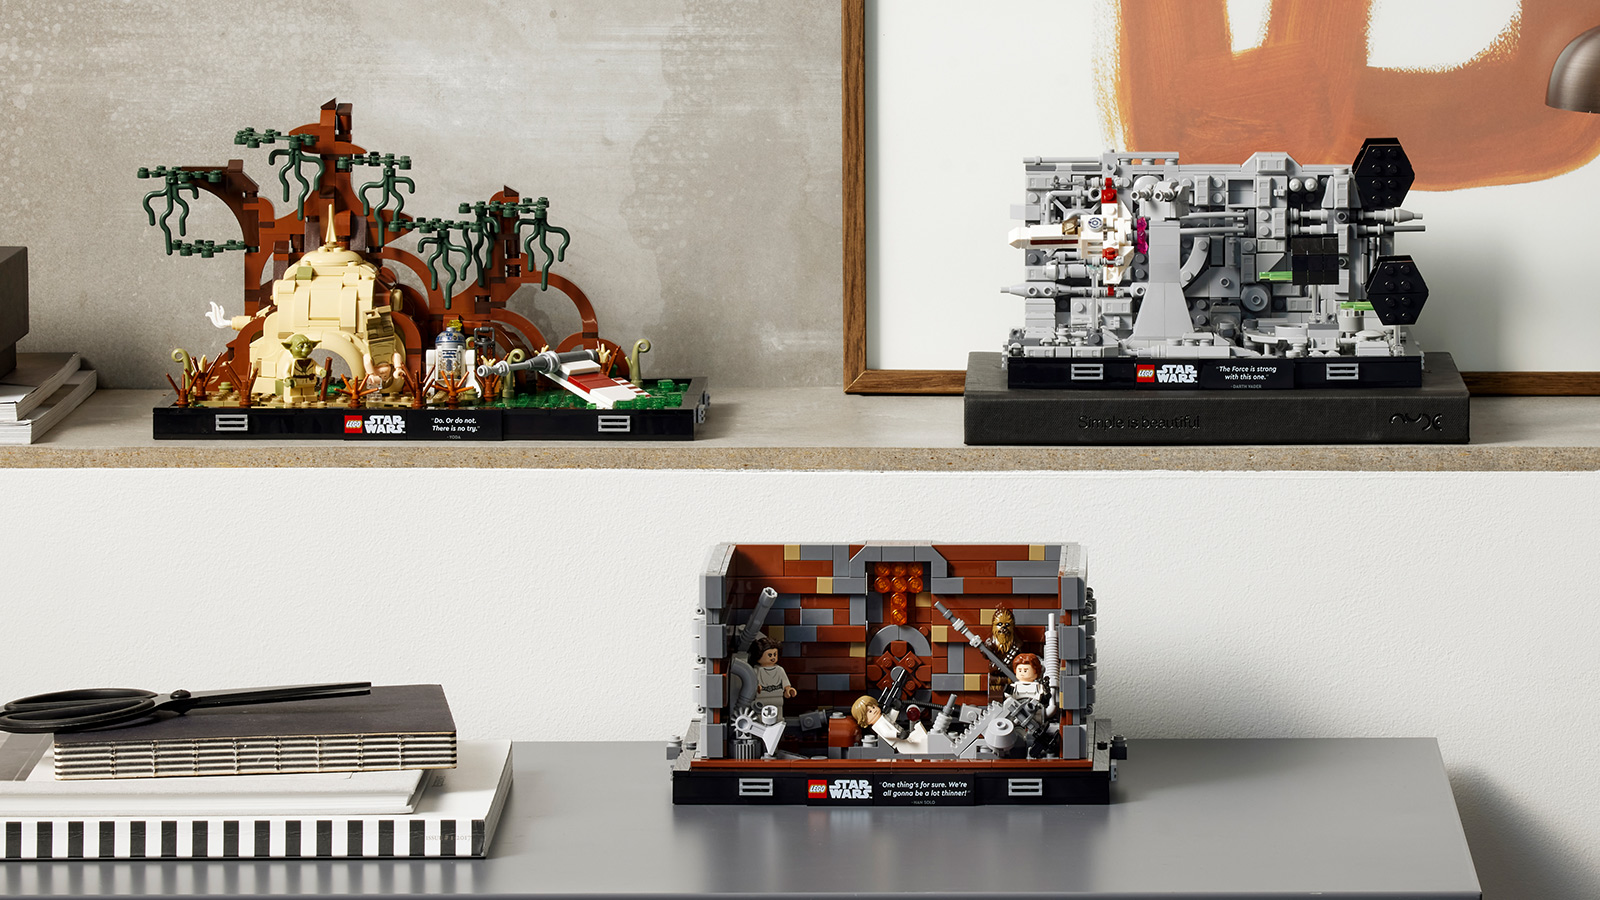 LEGO Star Wars Diorama building sets